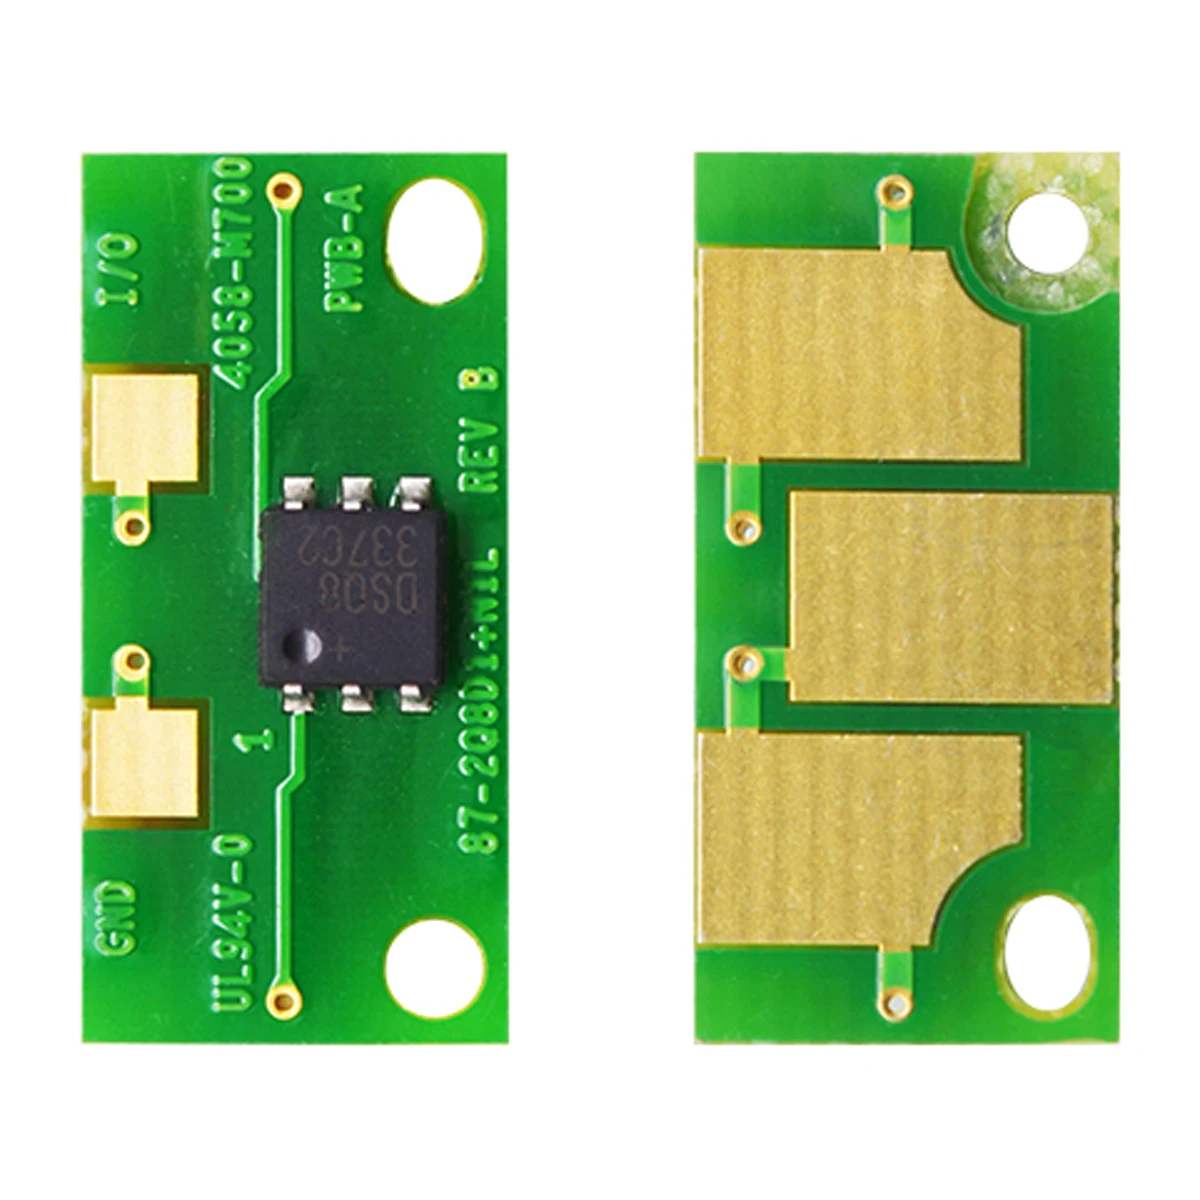 

Toner reset chip for Minolta BIZHUB C300 c352 refilled laser printer cartridge 8938-701 8938-704 8938-703 8938-702